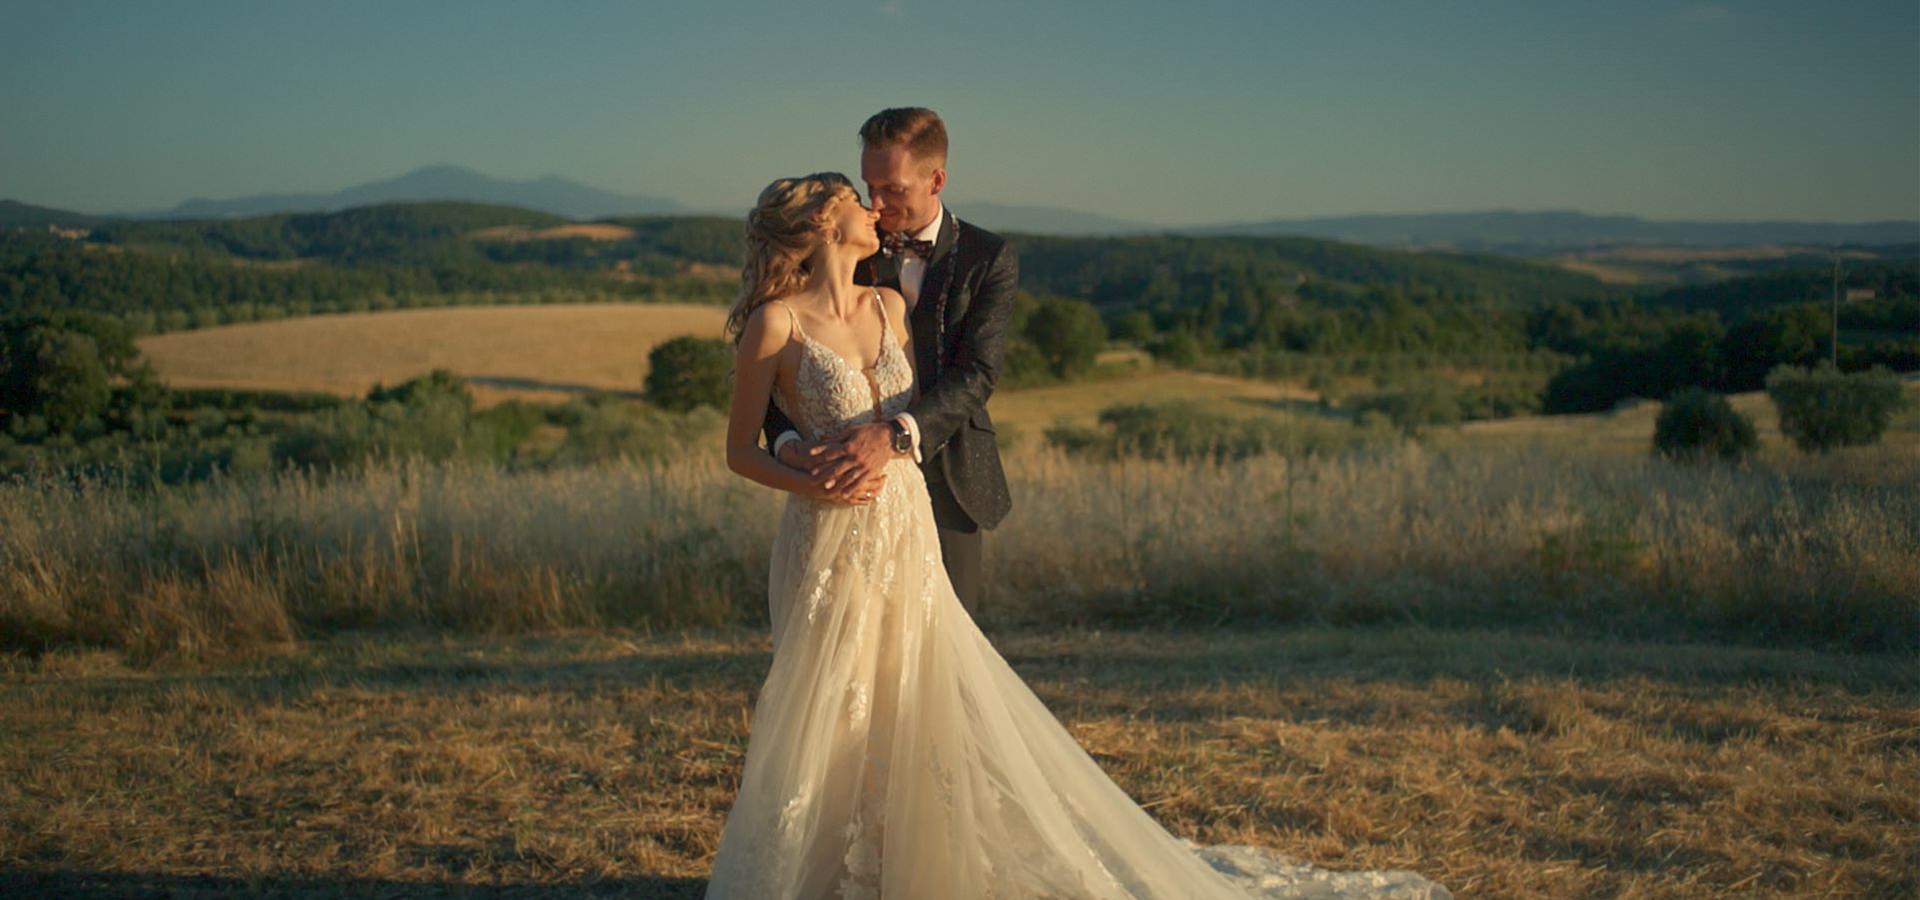 Tuscany wedding videographer DO wedding Films